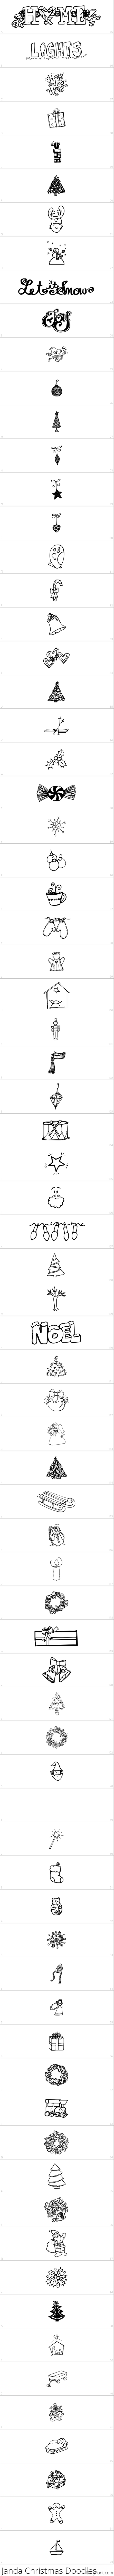 Janda Christmas Doodles character map